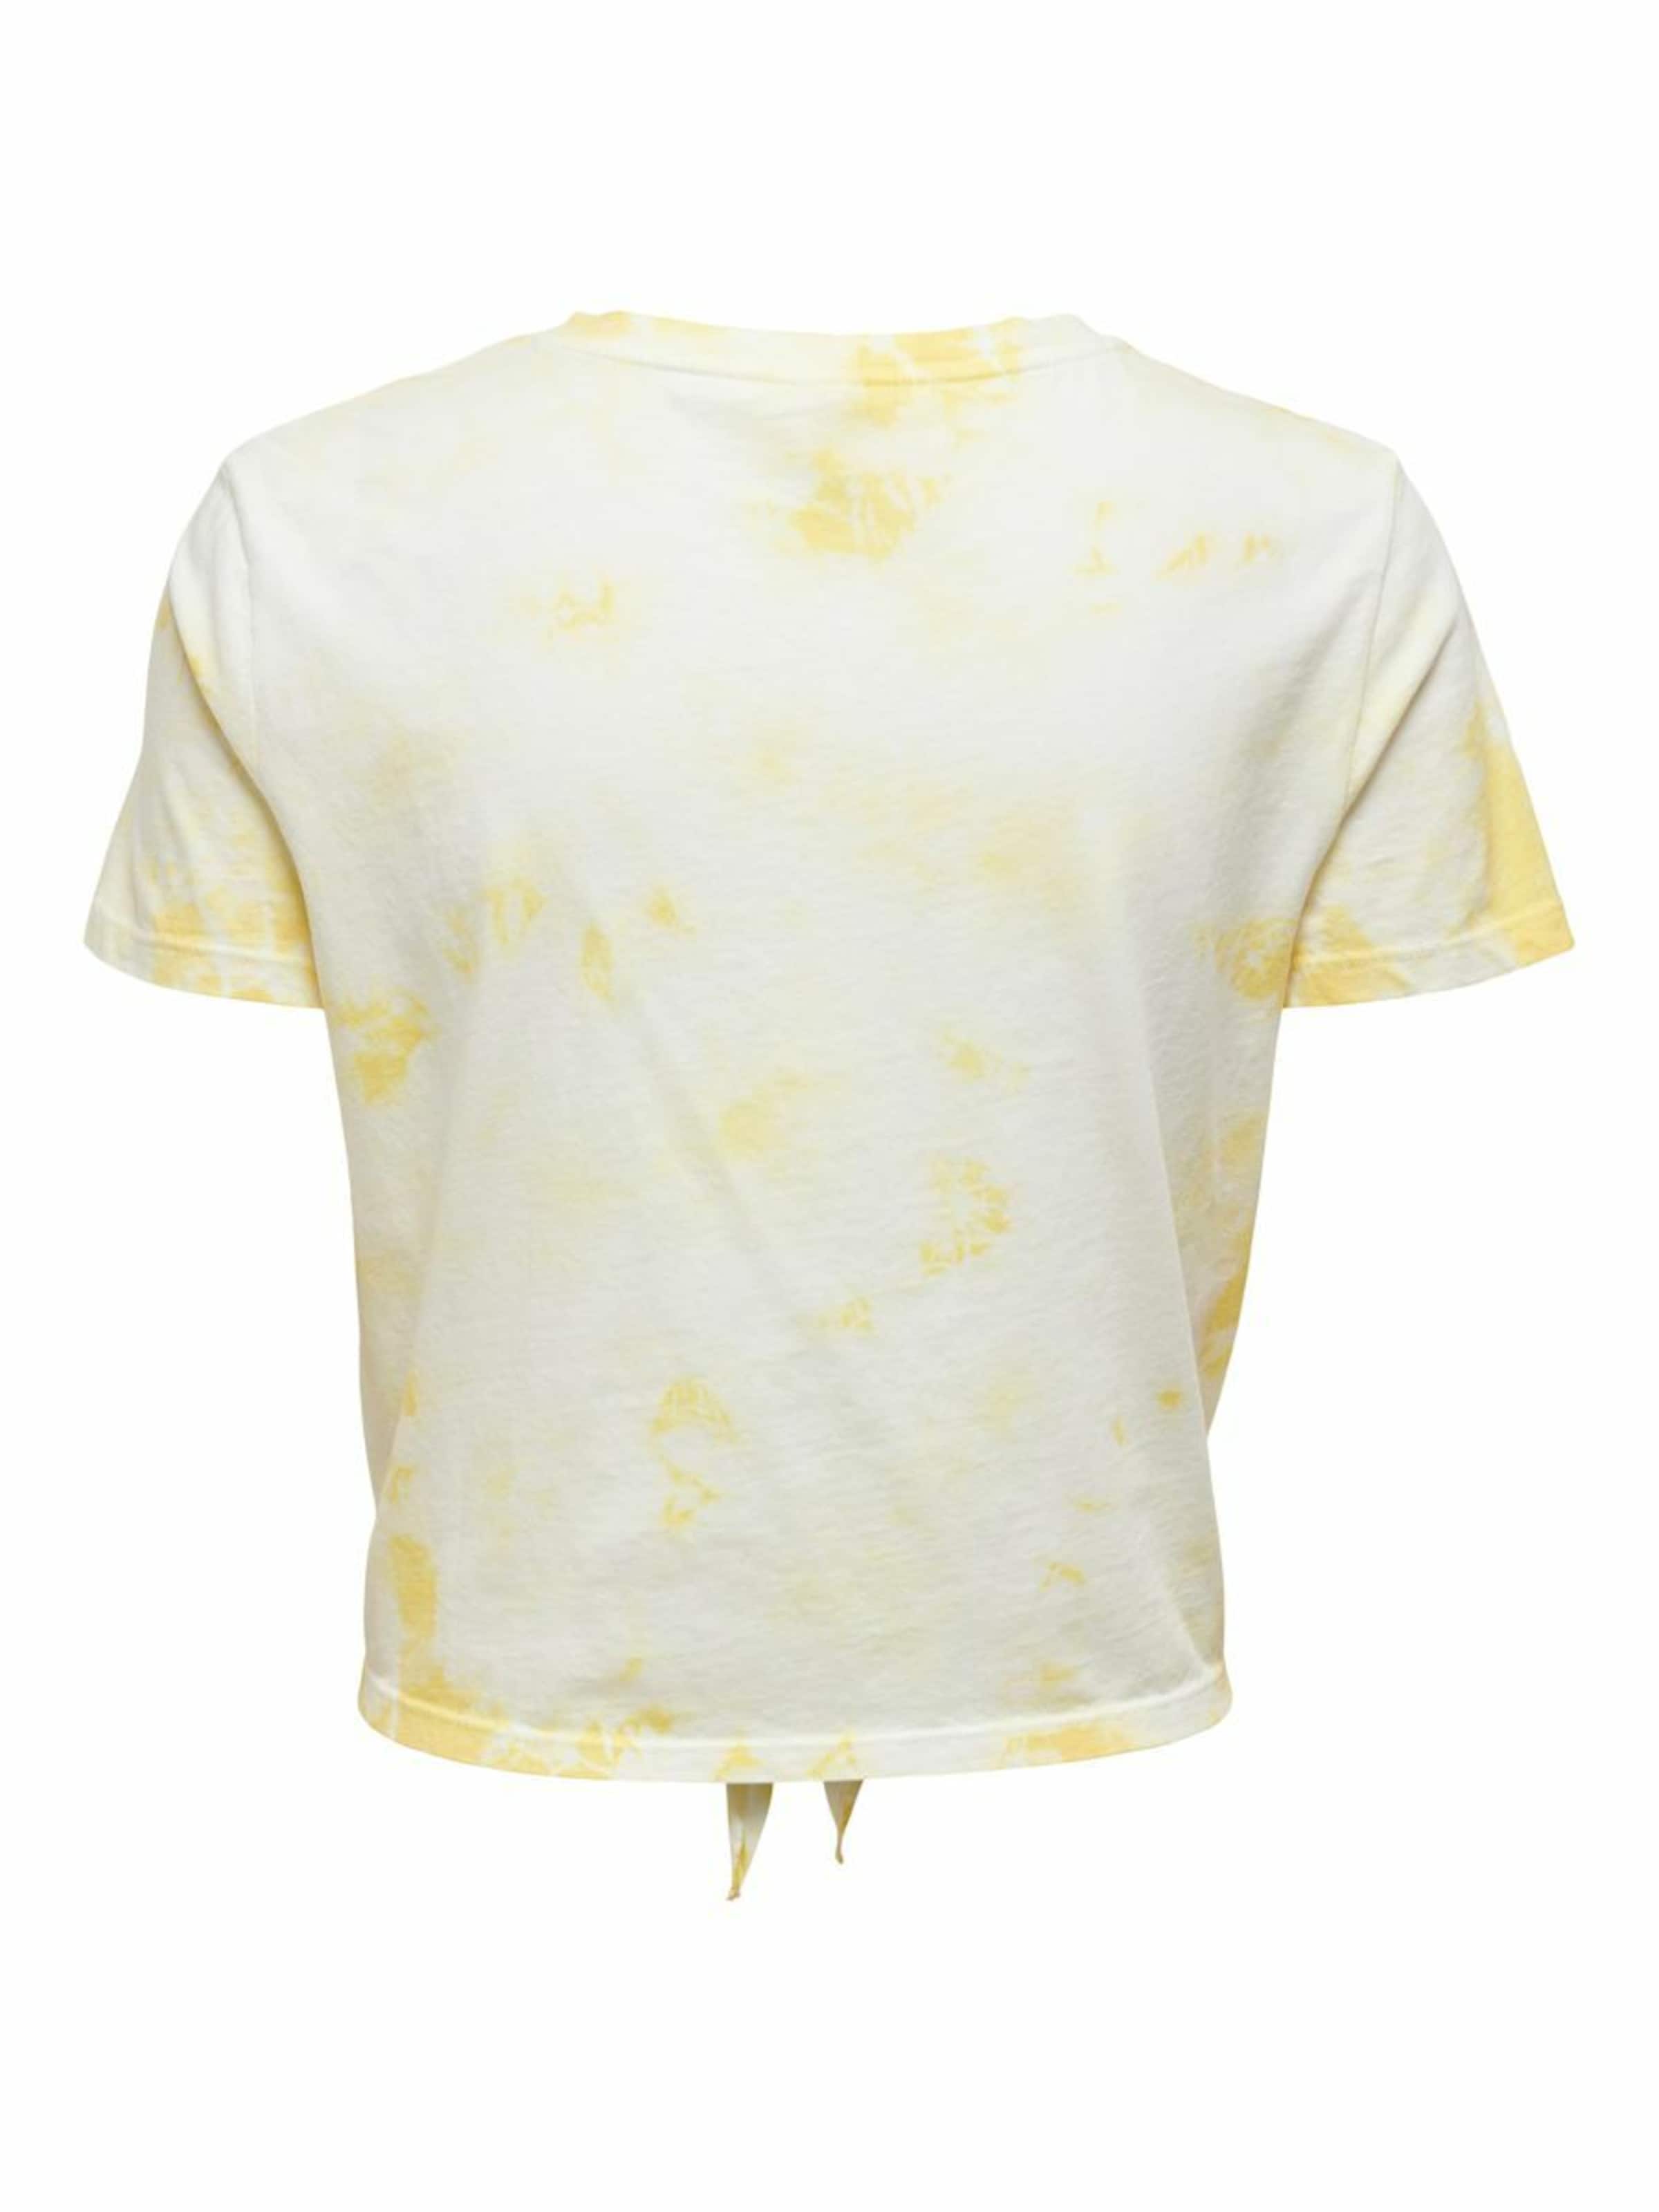 ONLY T-Shirt in Gelb, Pastellgelb 